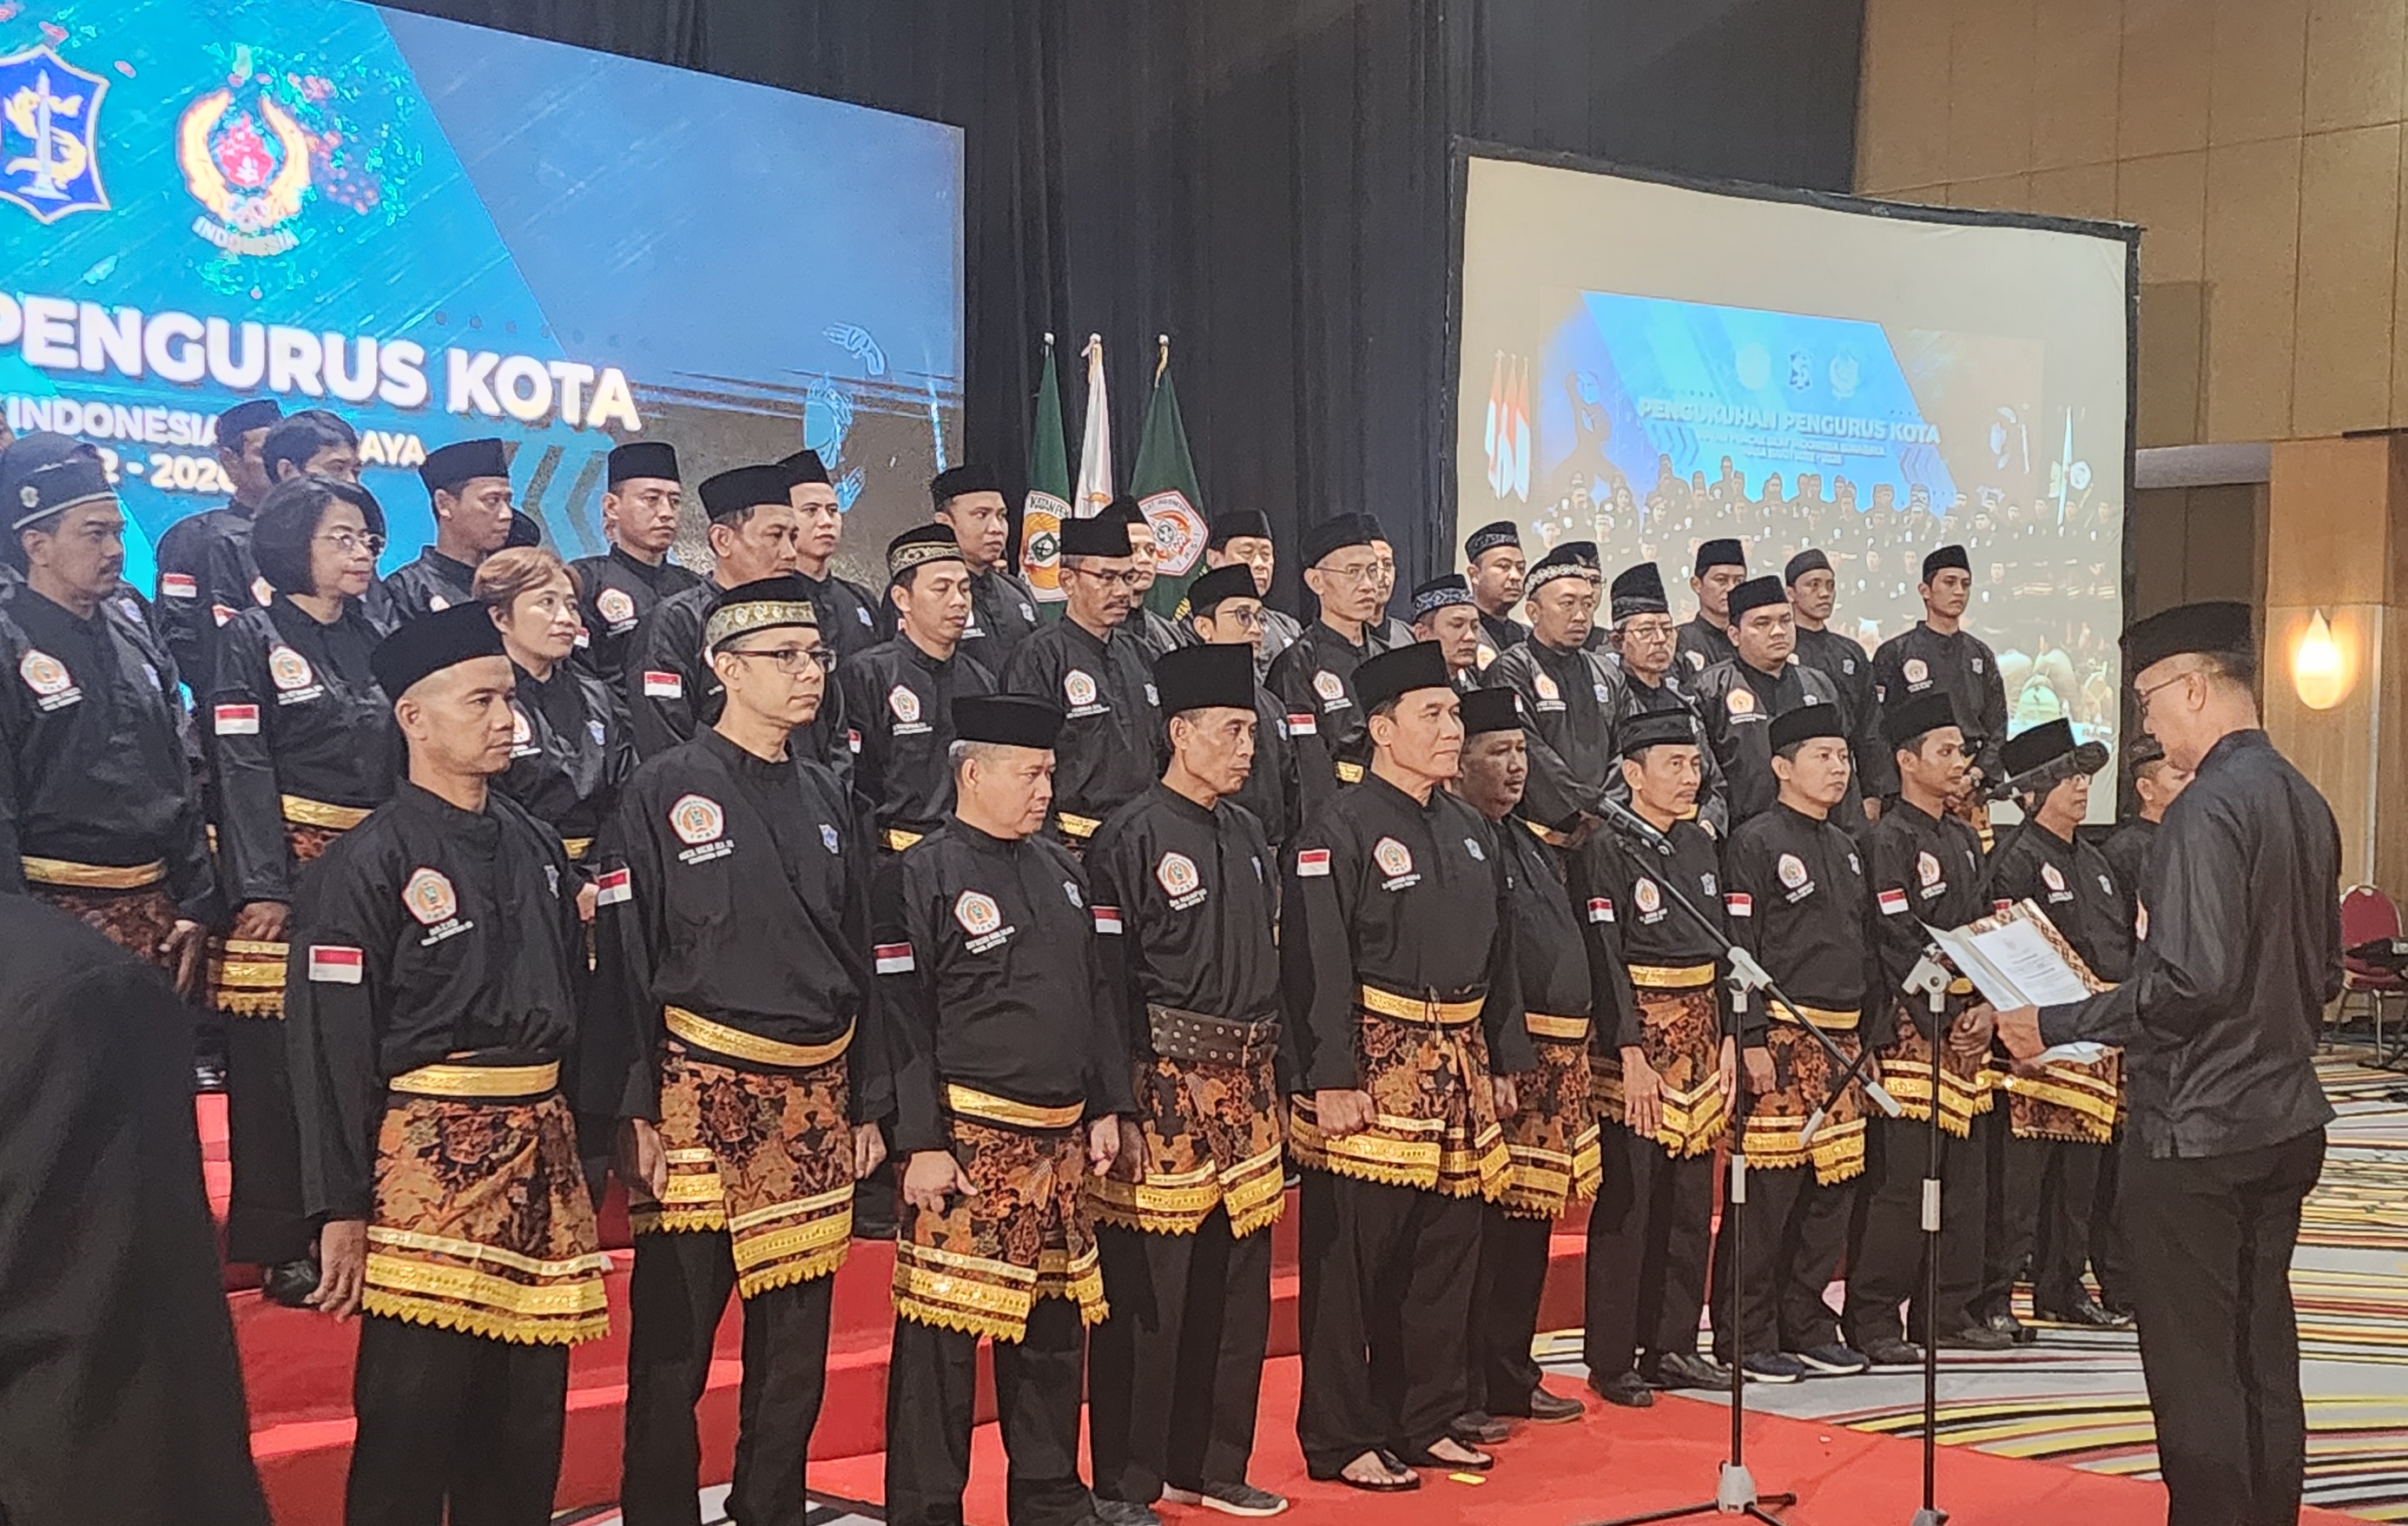 Pengurus IPSI Surabaya Dilantik, BHS Target 12 Emas Porprov